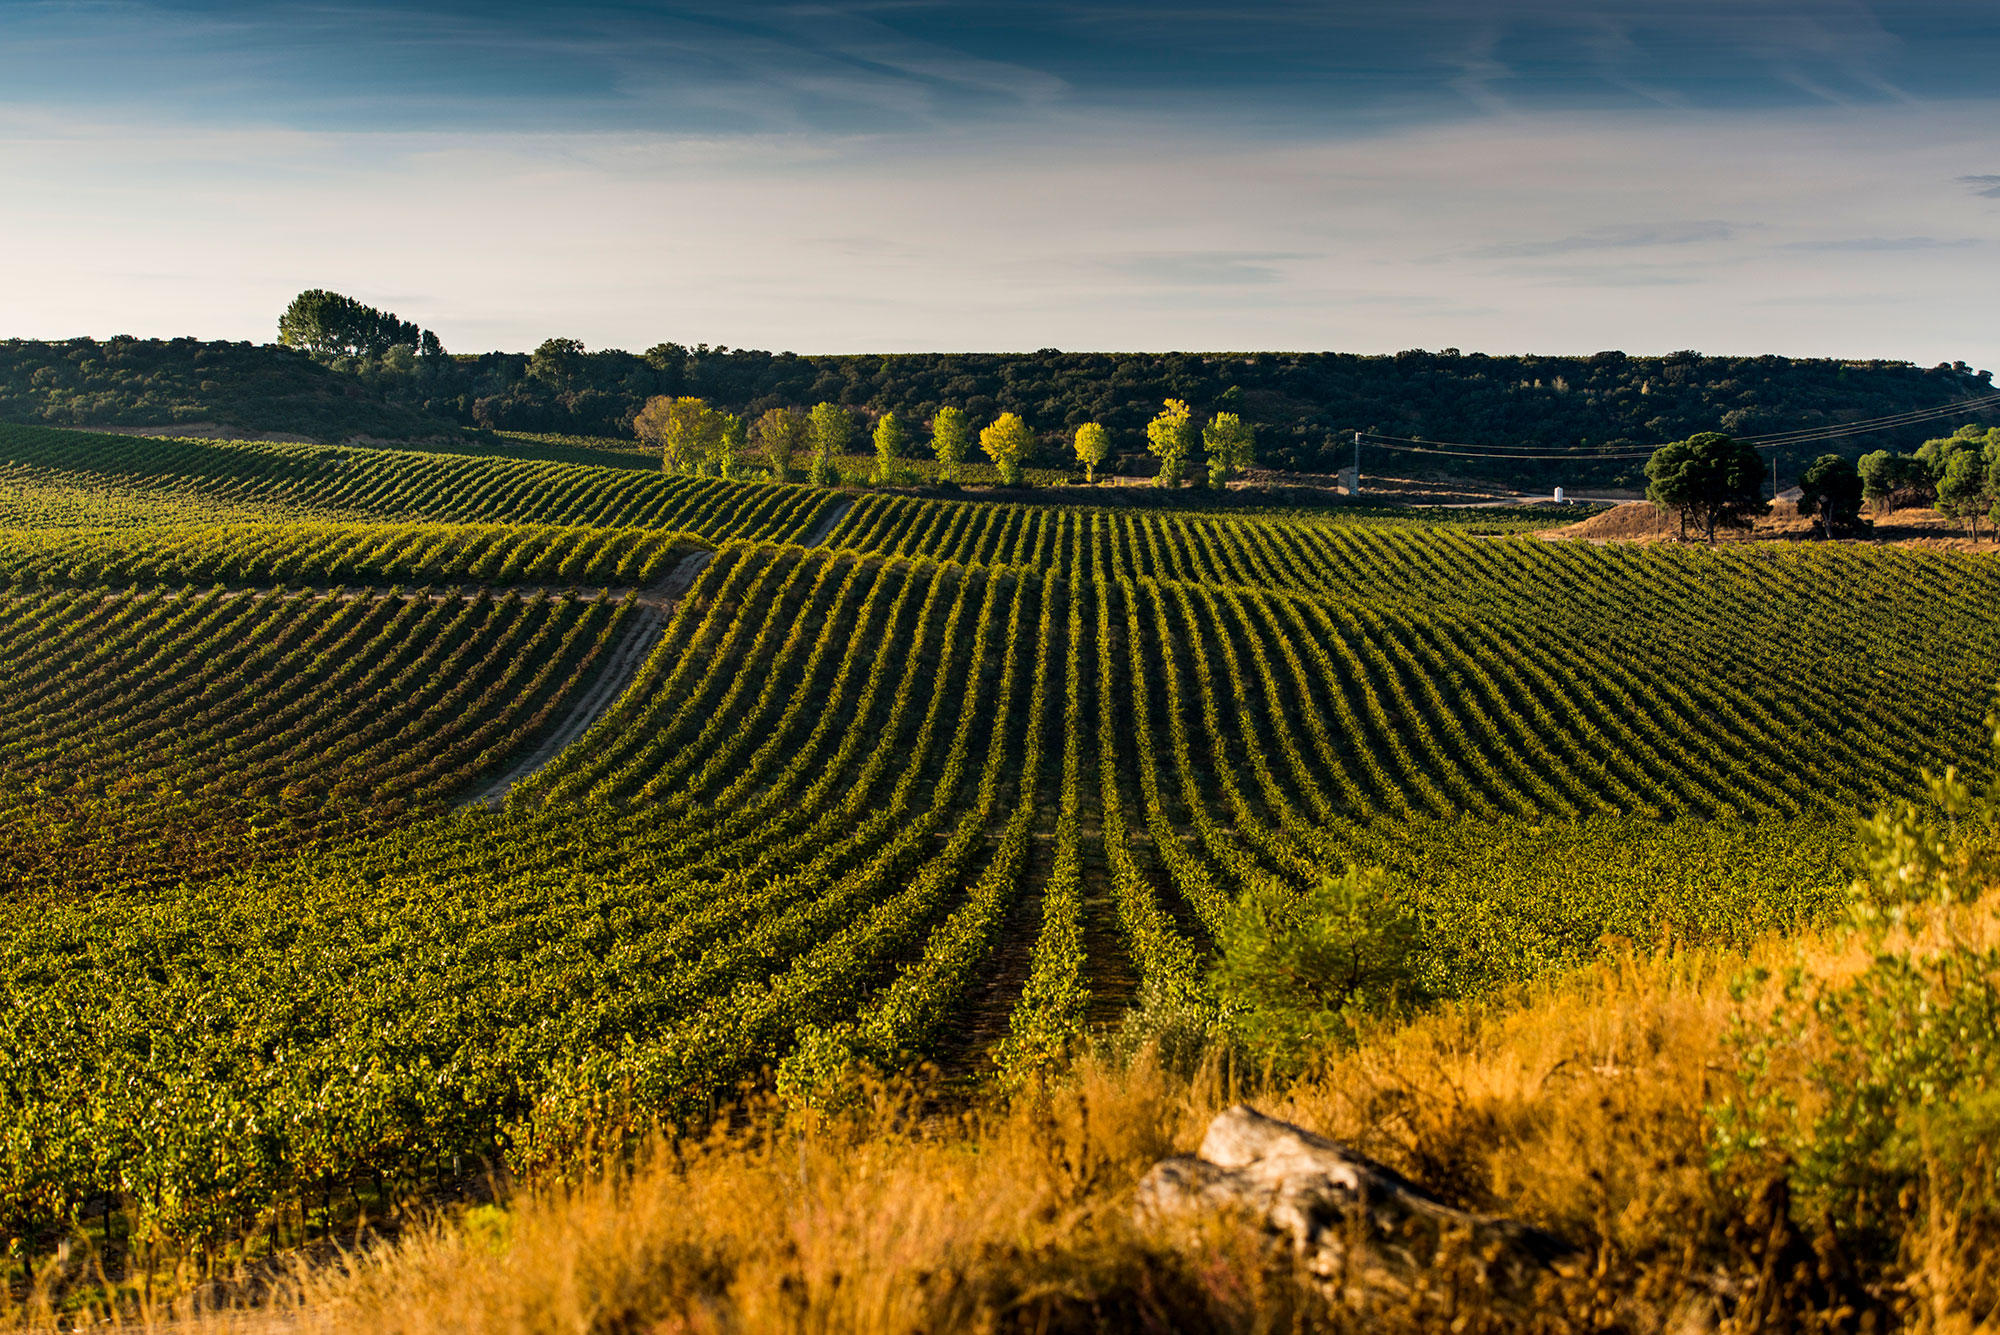 The vineyards of Codorníu